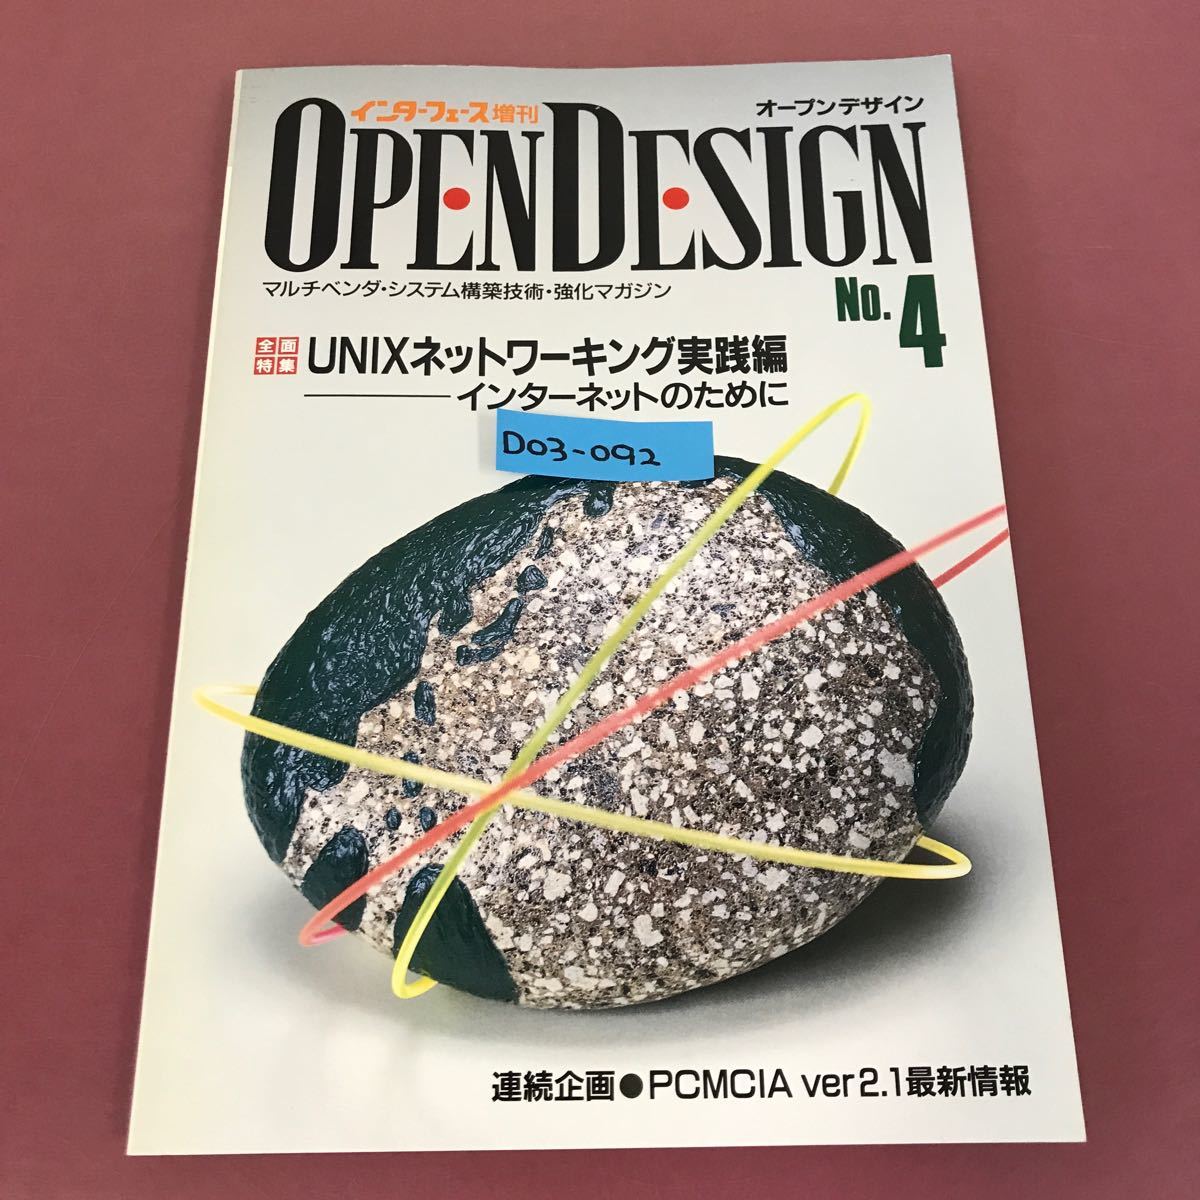 D03-092 OPEN DESIGN No.4 UNIXネットワーキング実践編 インターネットのために CQ出版社 1994年9月10日発行 オープンデザイン 汚れ有り